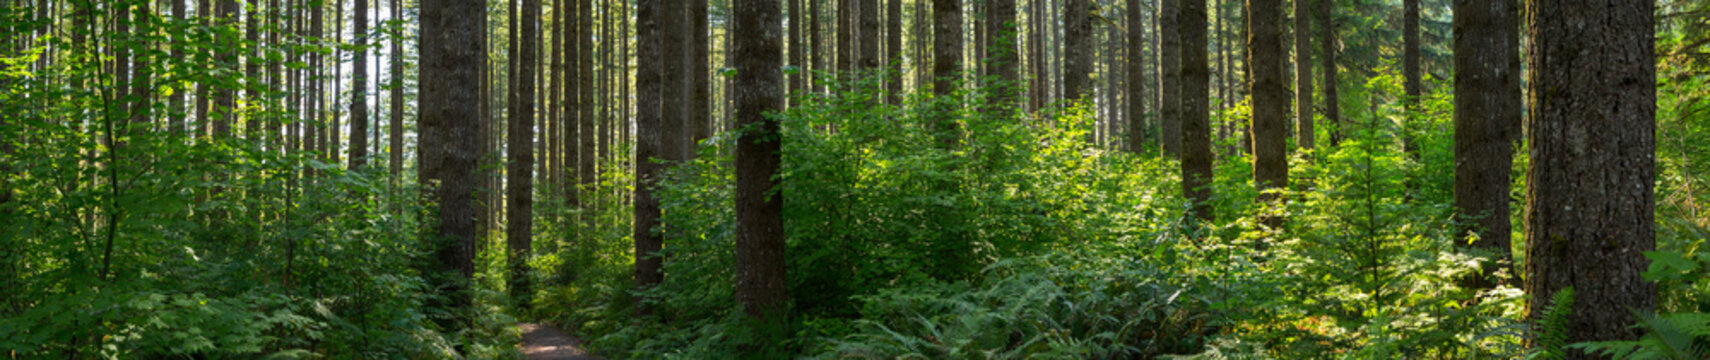 Fototapeta Douglas Fir tree forest in Pacific Northwest USA